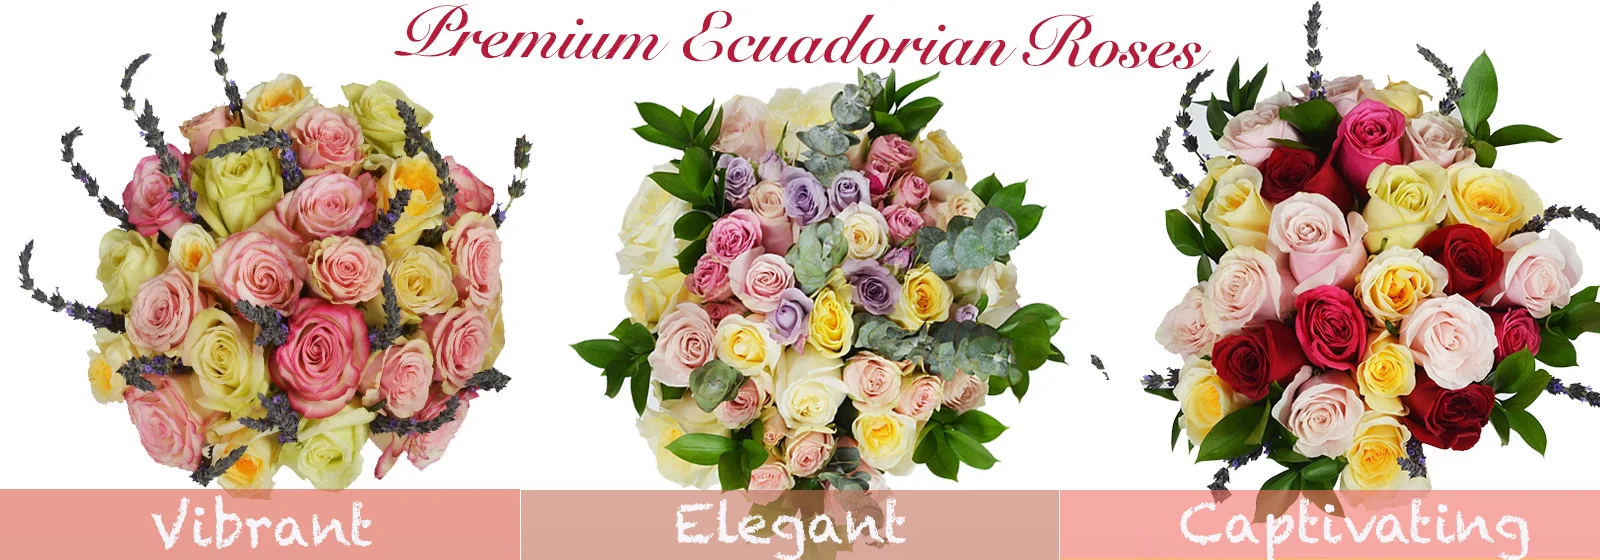 Ecuadorian Roses